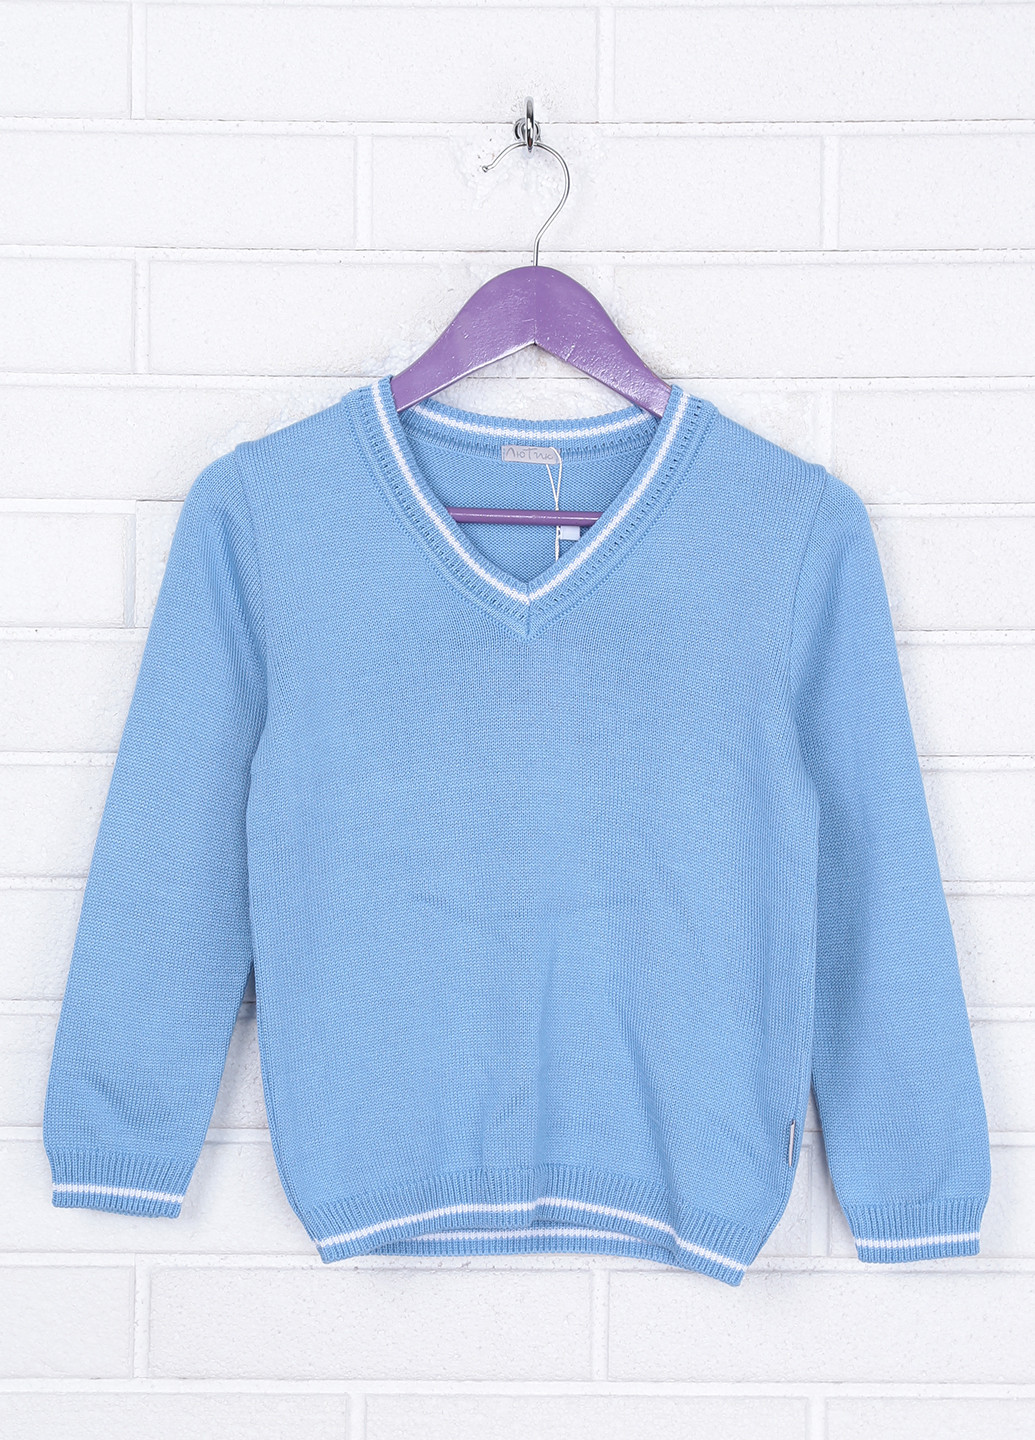 Голубой демисезонный пуловер пуловер Лютик